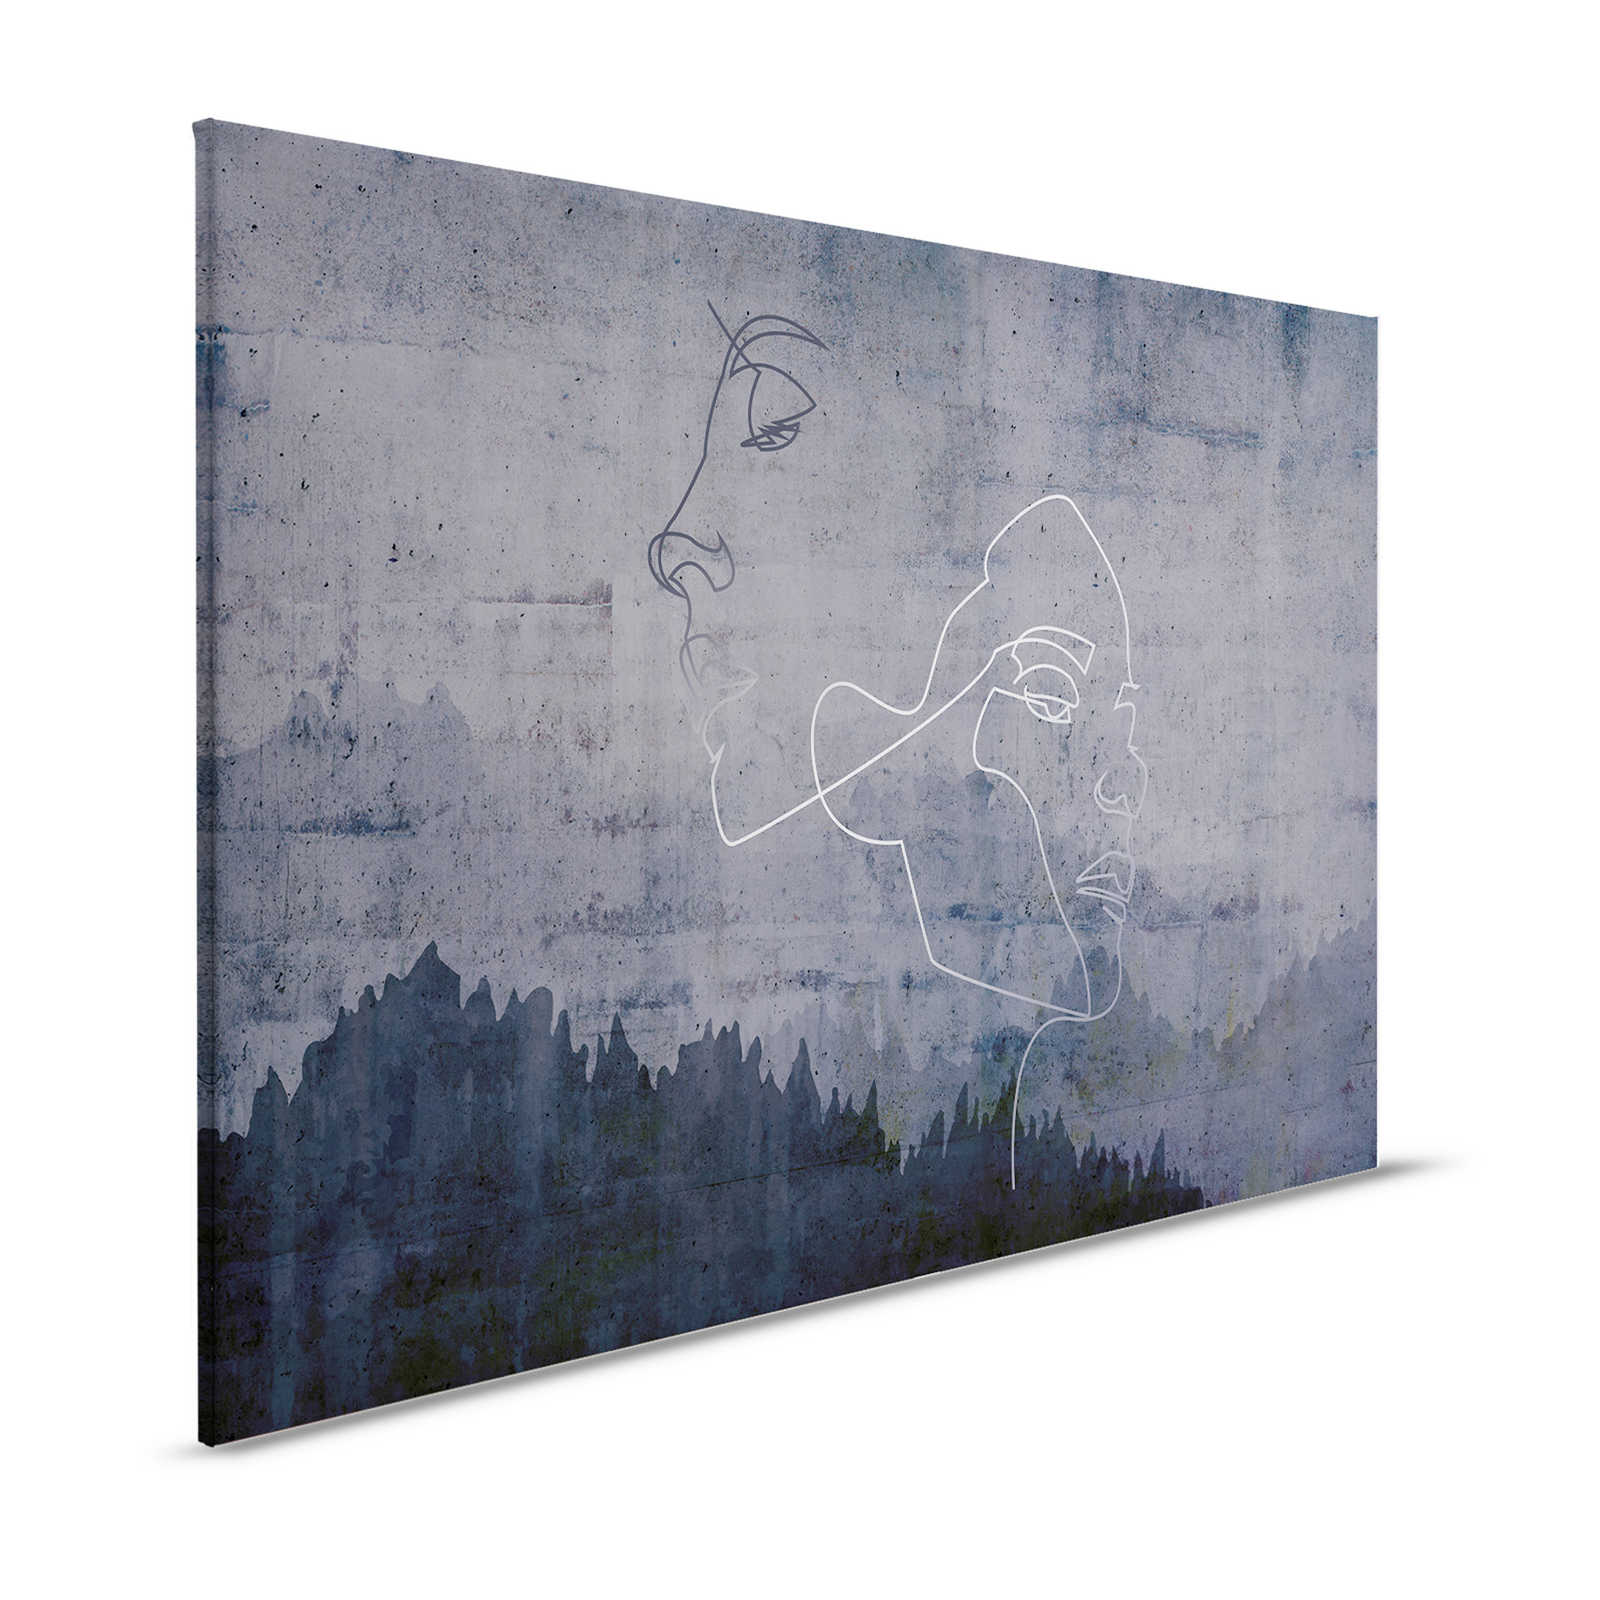 Leinwandbild Anthrazit Betonoptik & silber Liniendesign – 1,20 m x 0,80 m
